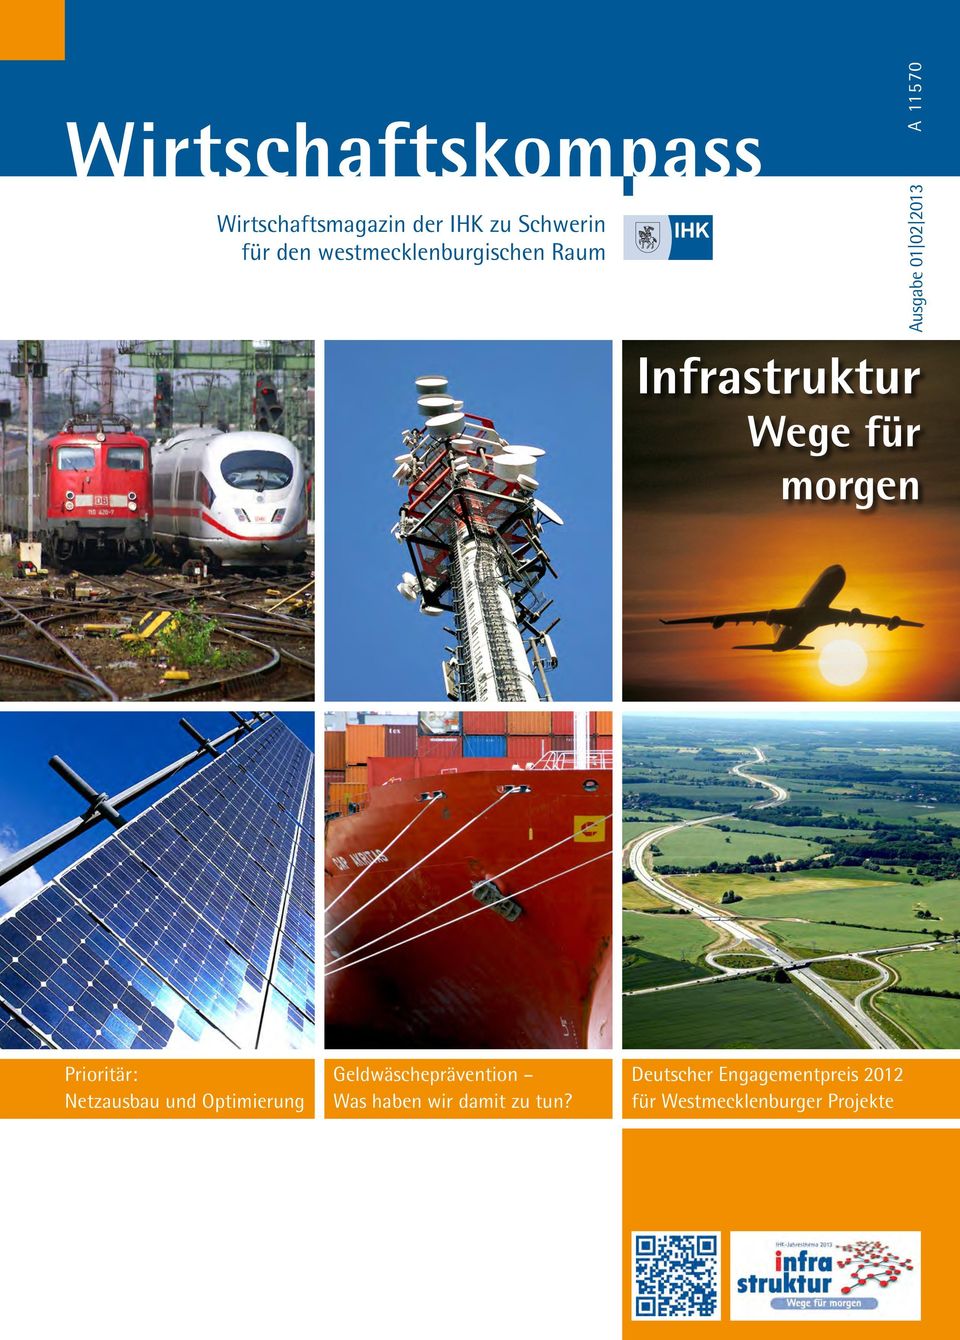 2013 Ifrastruktur Wege für morge Prioritär: Netzausbau ud Optimierug